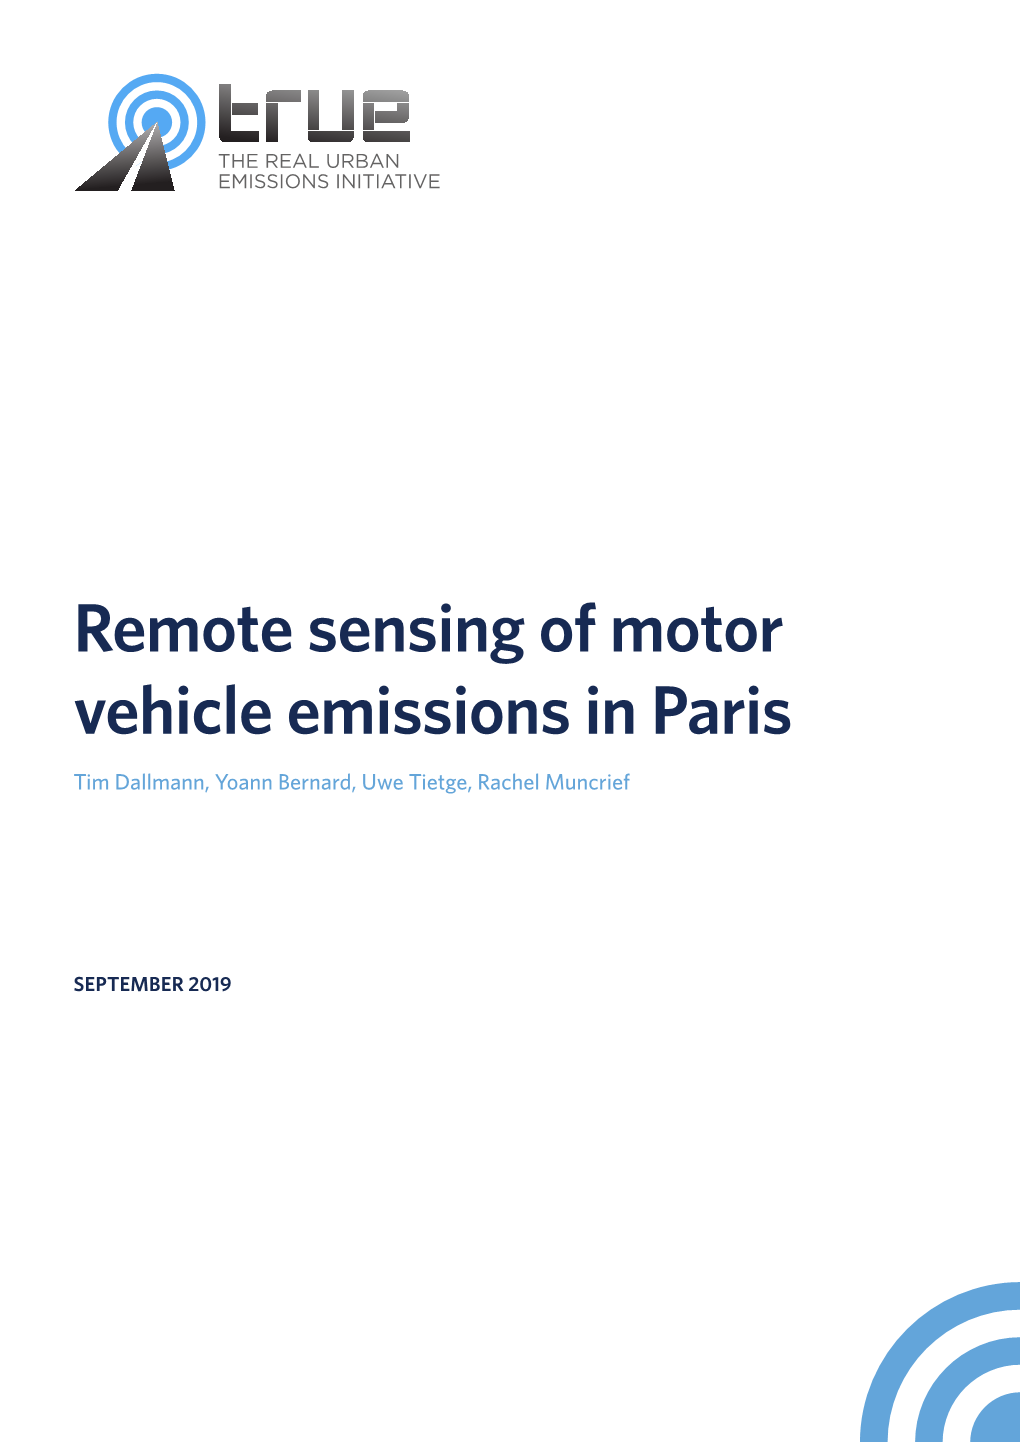 Remote Sensing of Motor Vehicle Emissions in Paris Tim Dallmann, Yoann Bernard, Uwe Tietge, Rachel Muncrief